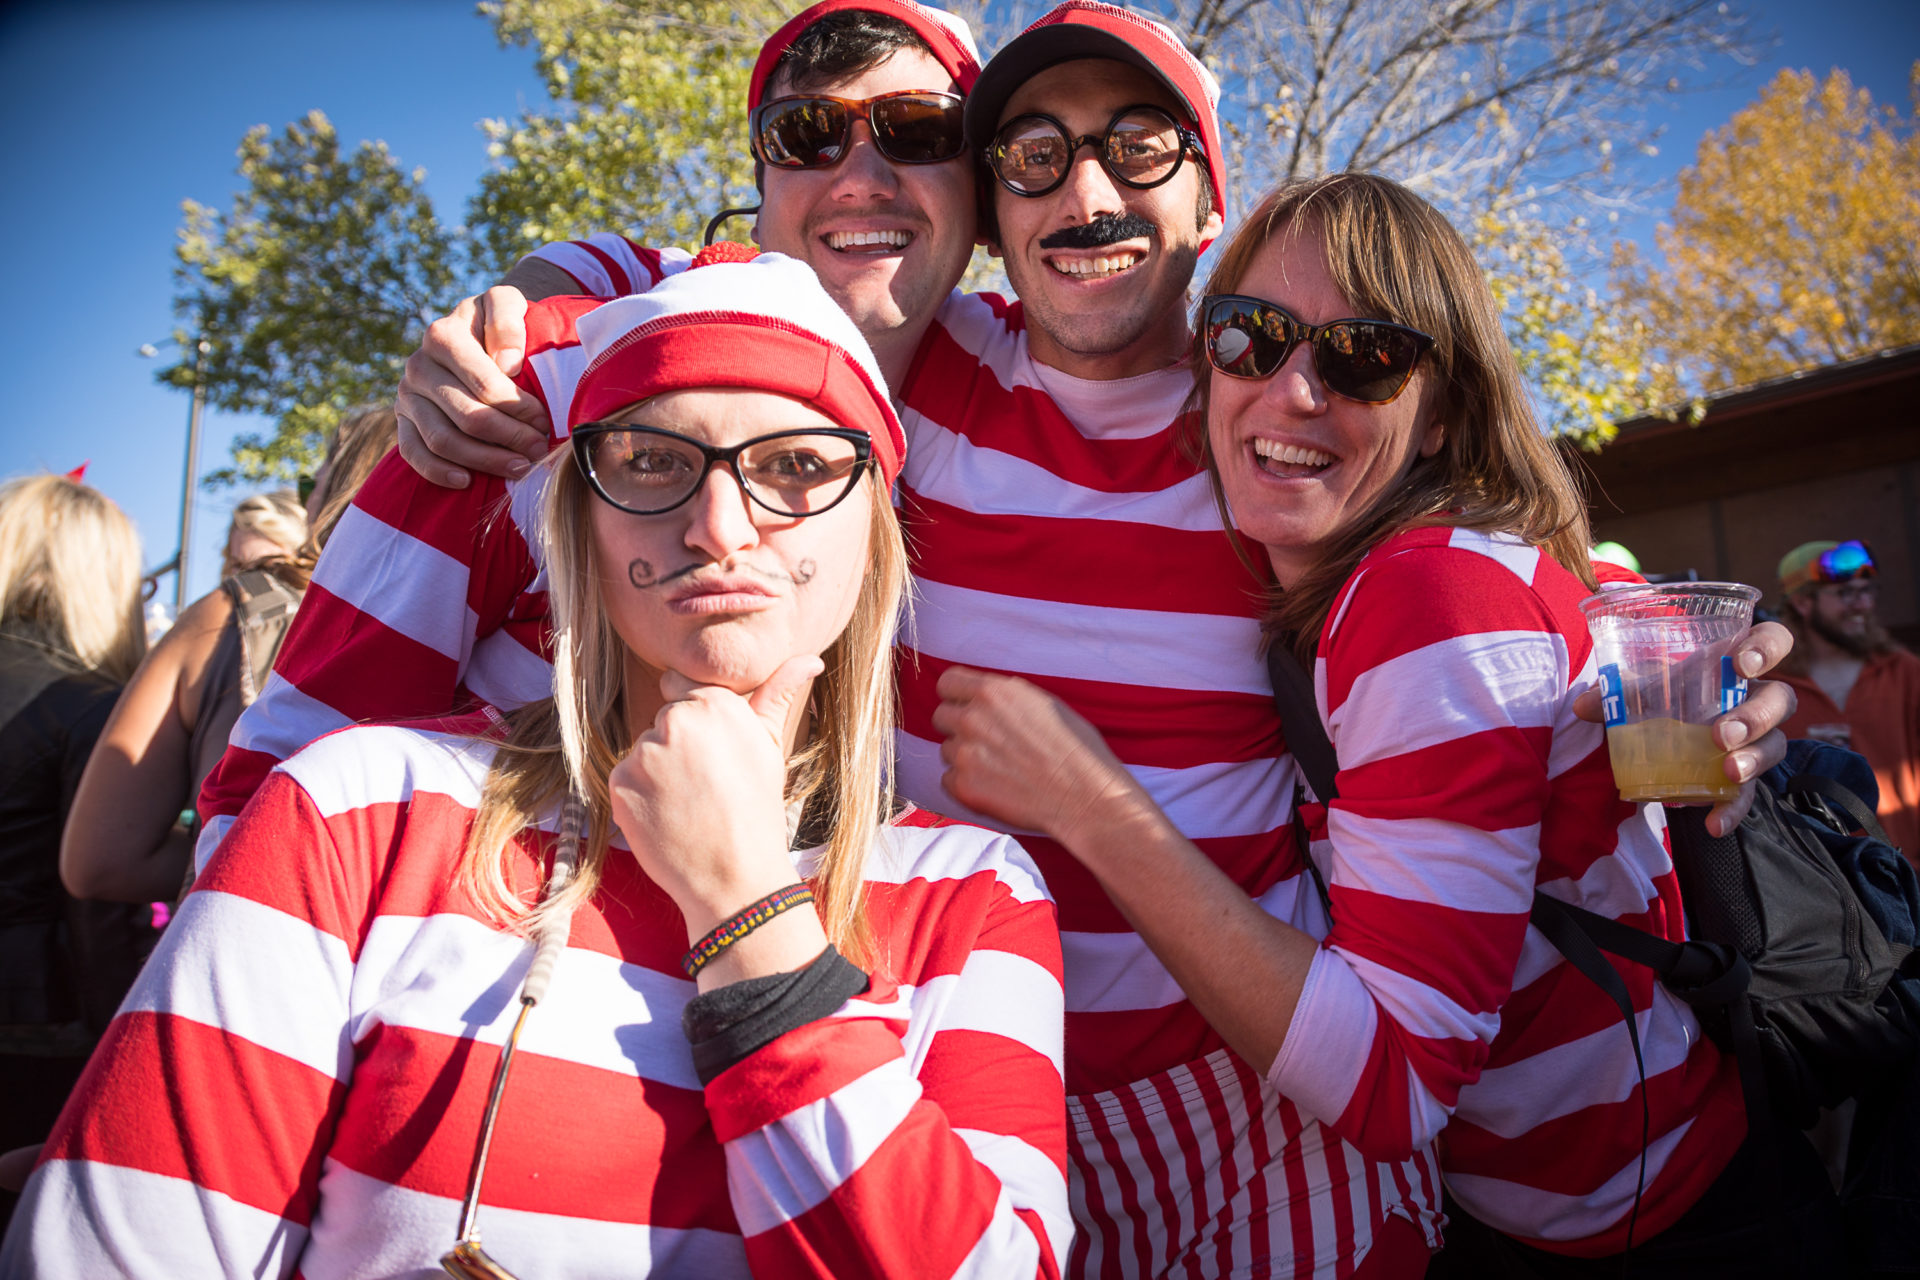 Steamboat Springs Mustache Ride - Where's Waldo?